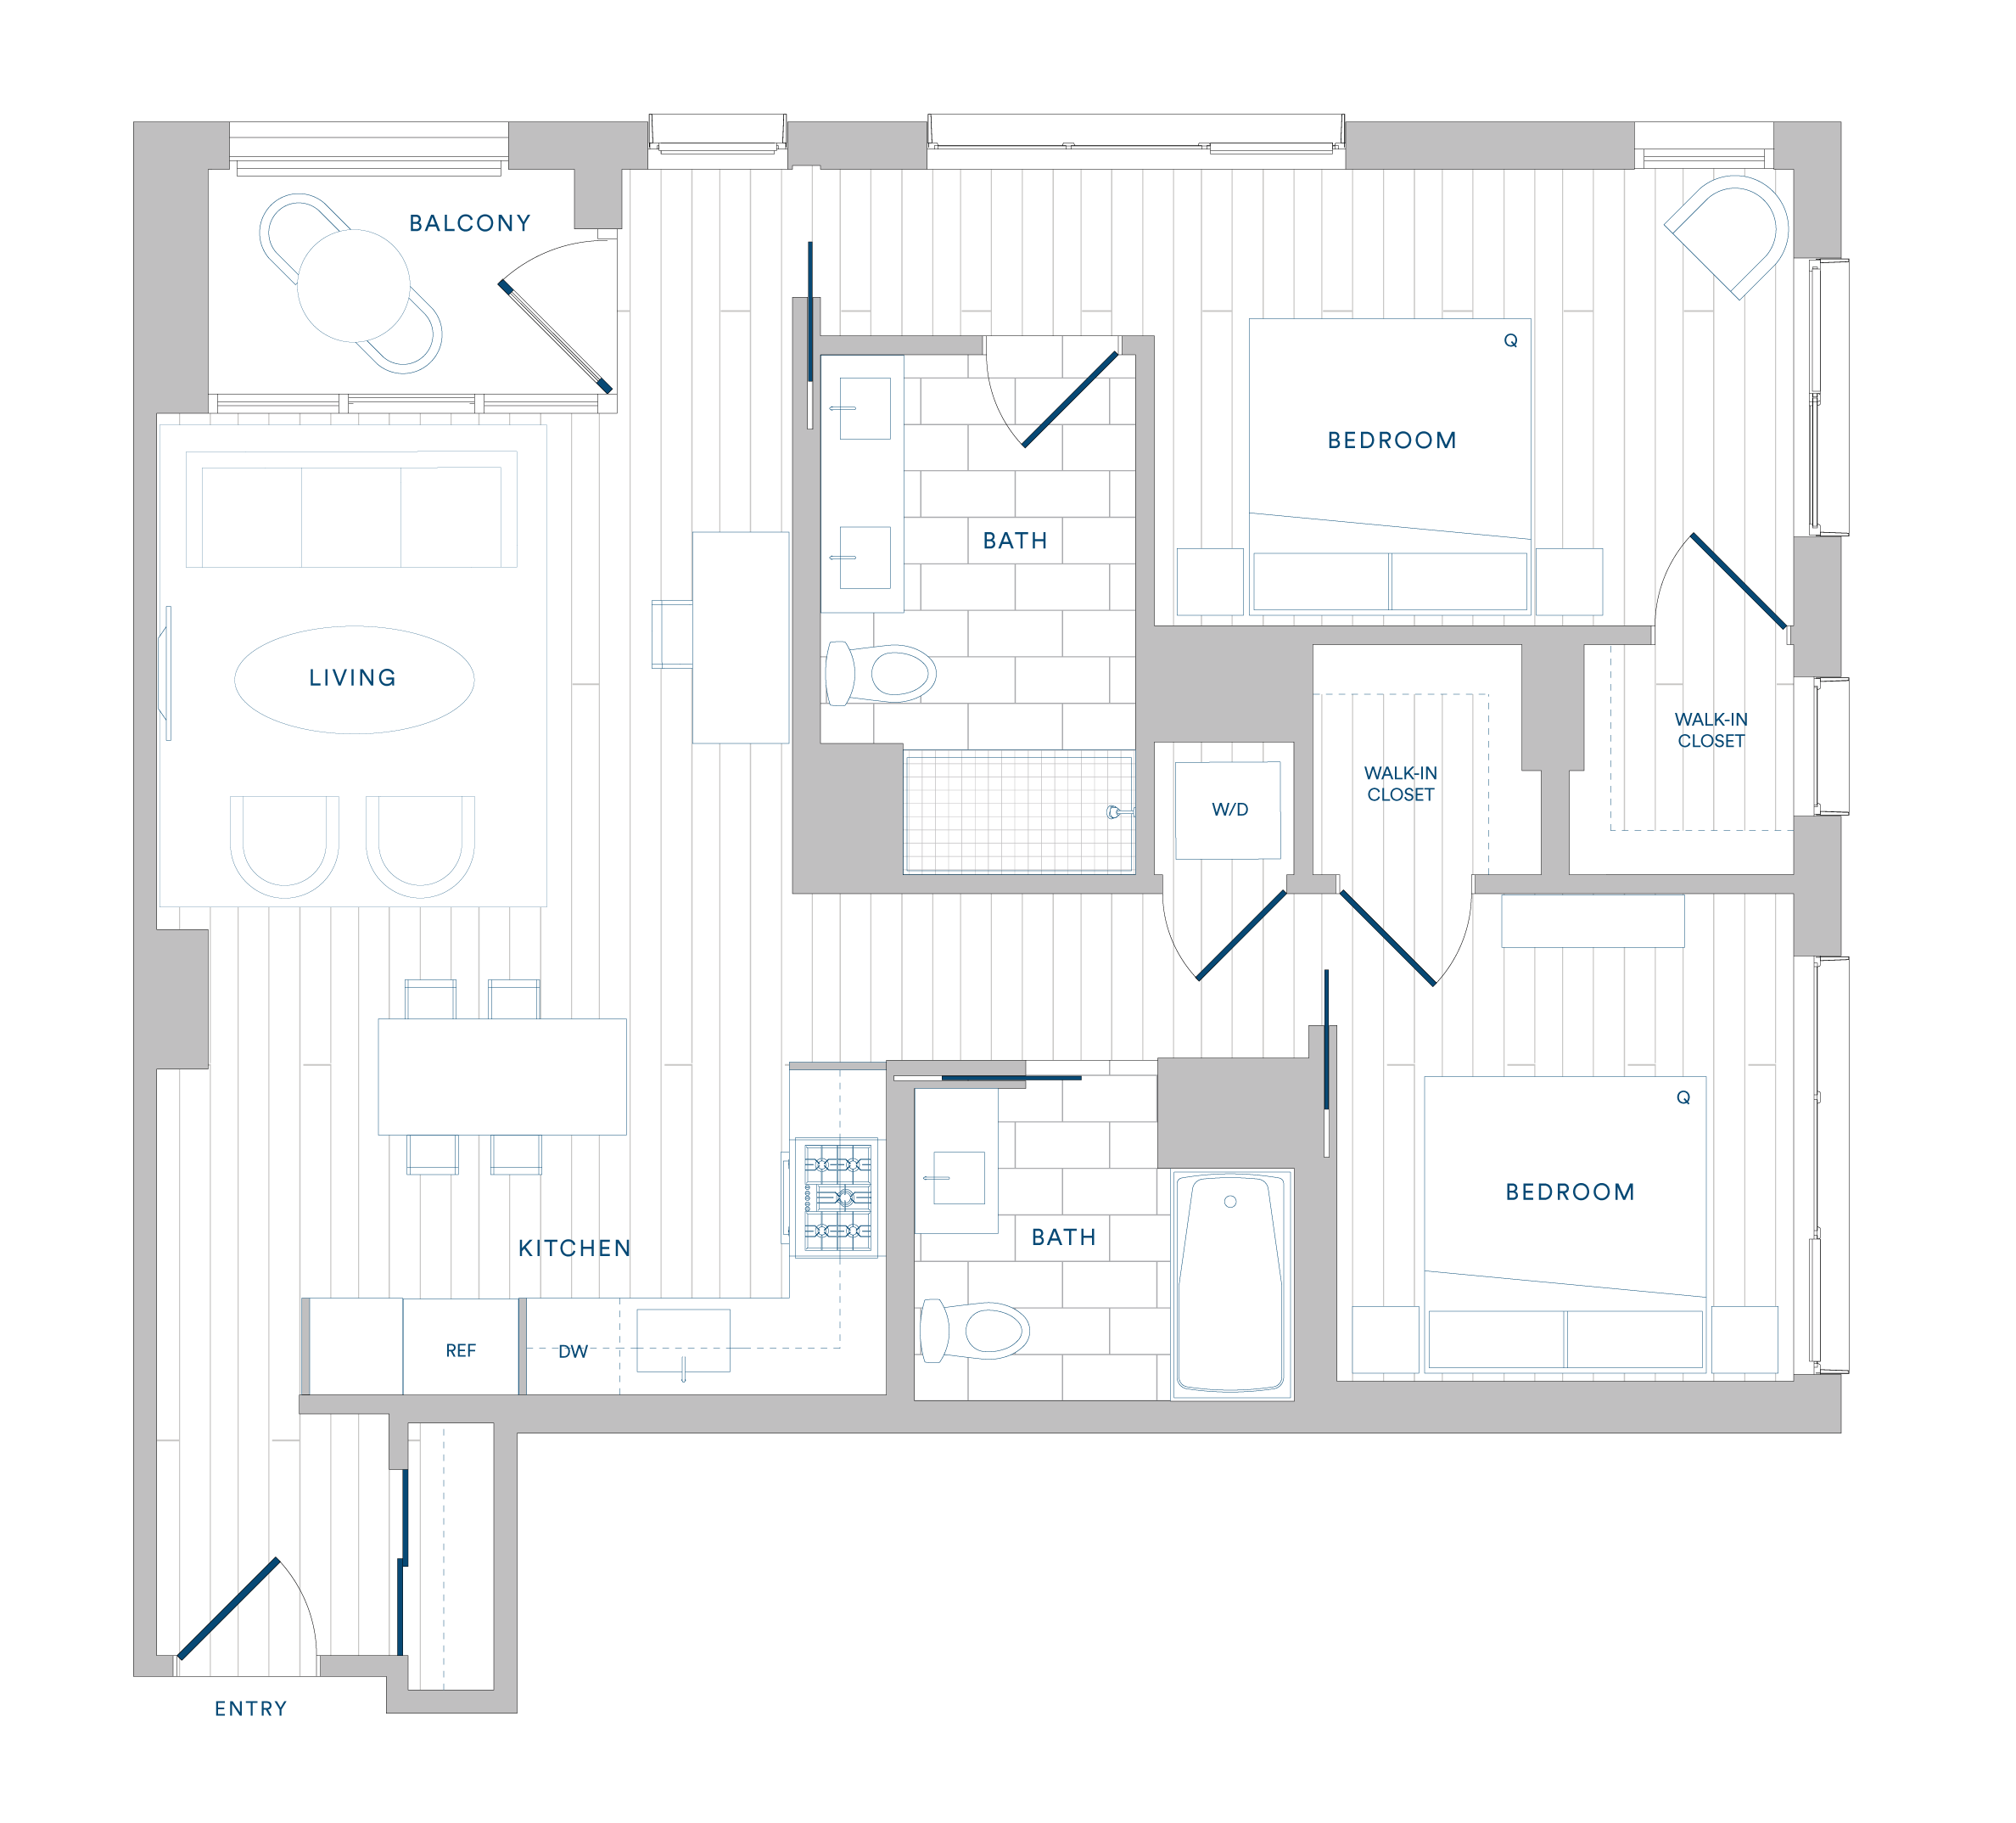 Floorplan for Apartment #714, 2 bedroom unit at Margarite